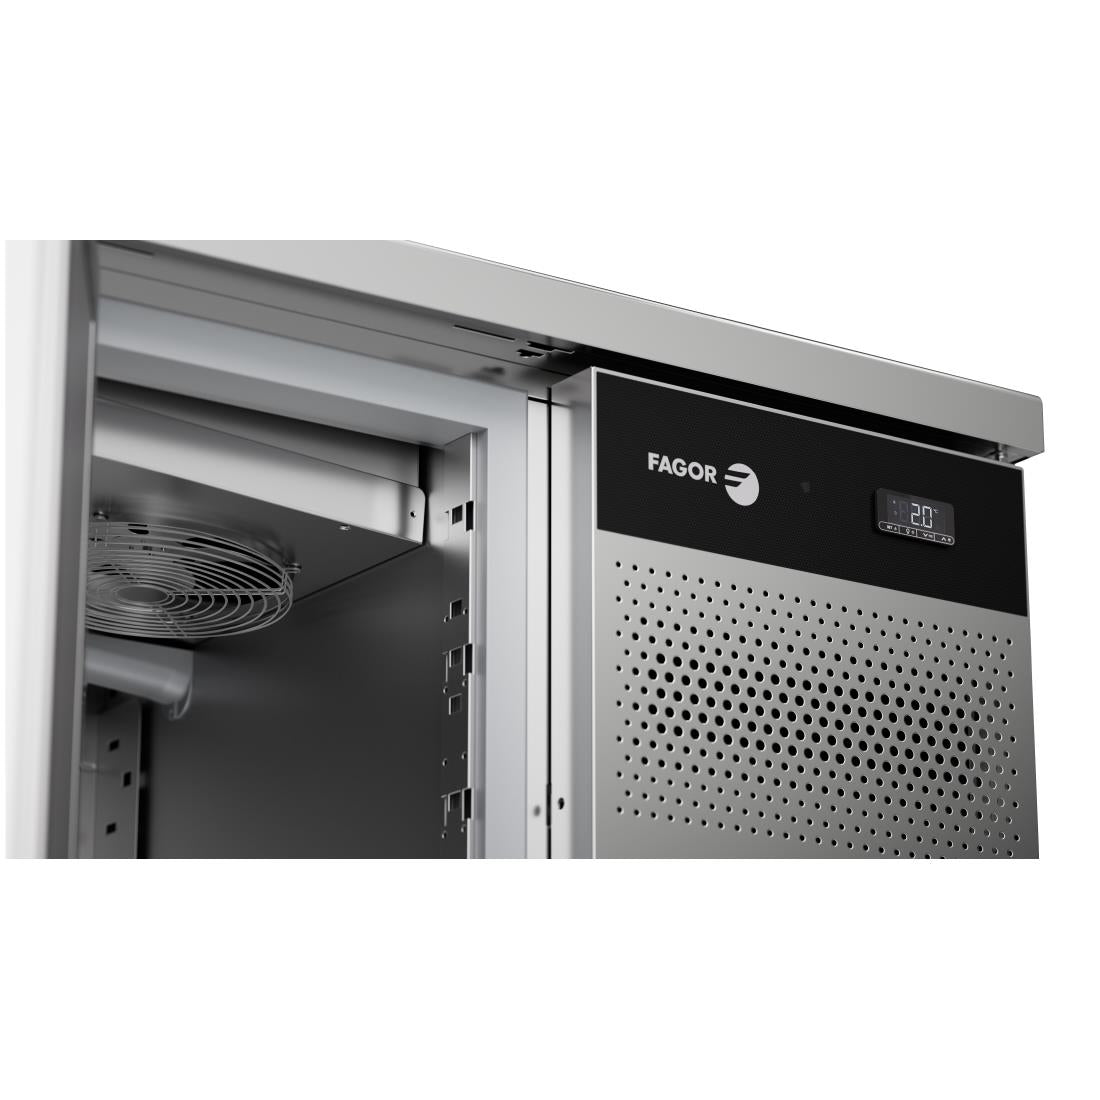 FU022 Fagor Concept 700 Gastronorm Counter Fridge 2 Door CCP-2G JD Catering Equipment Solutions Ltd